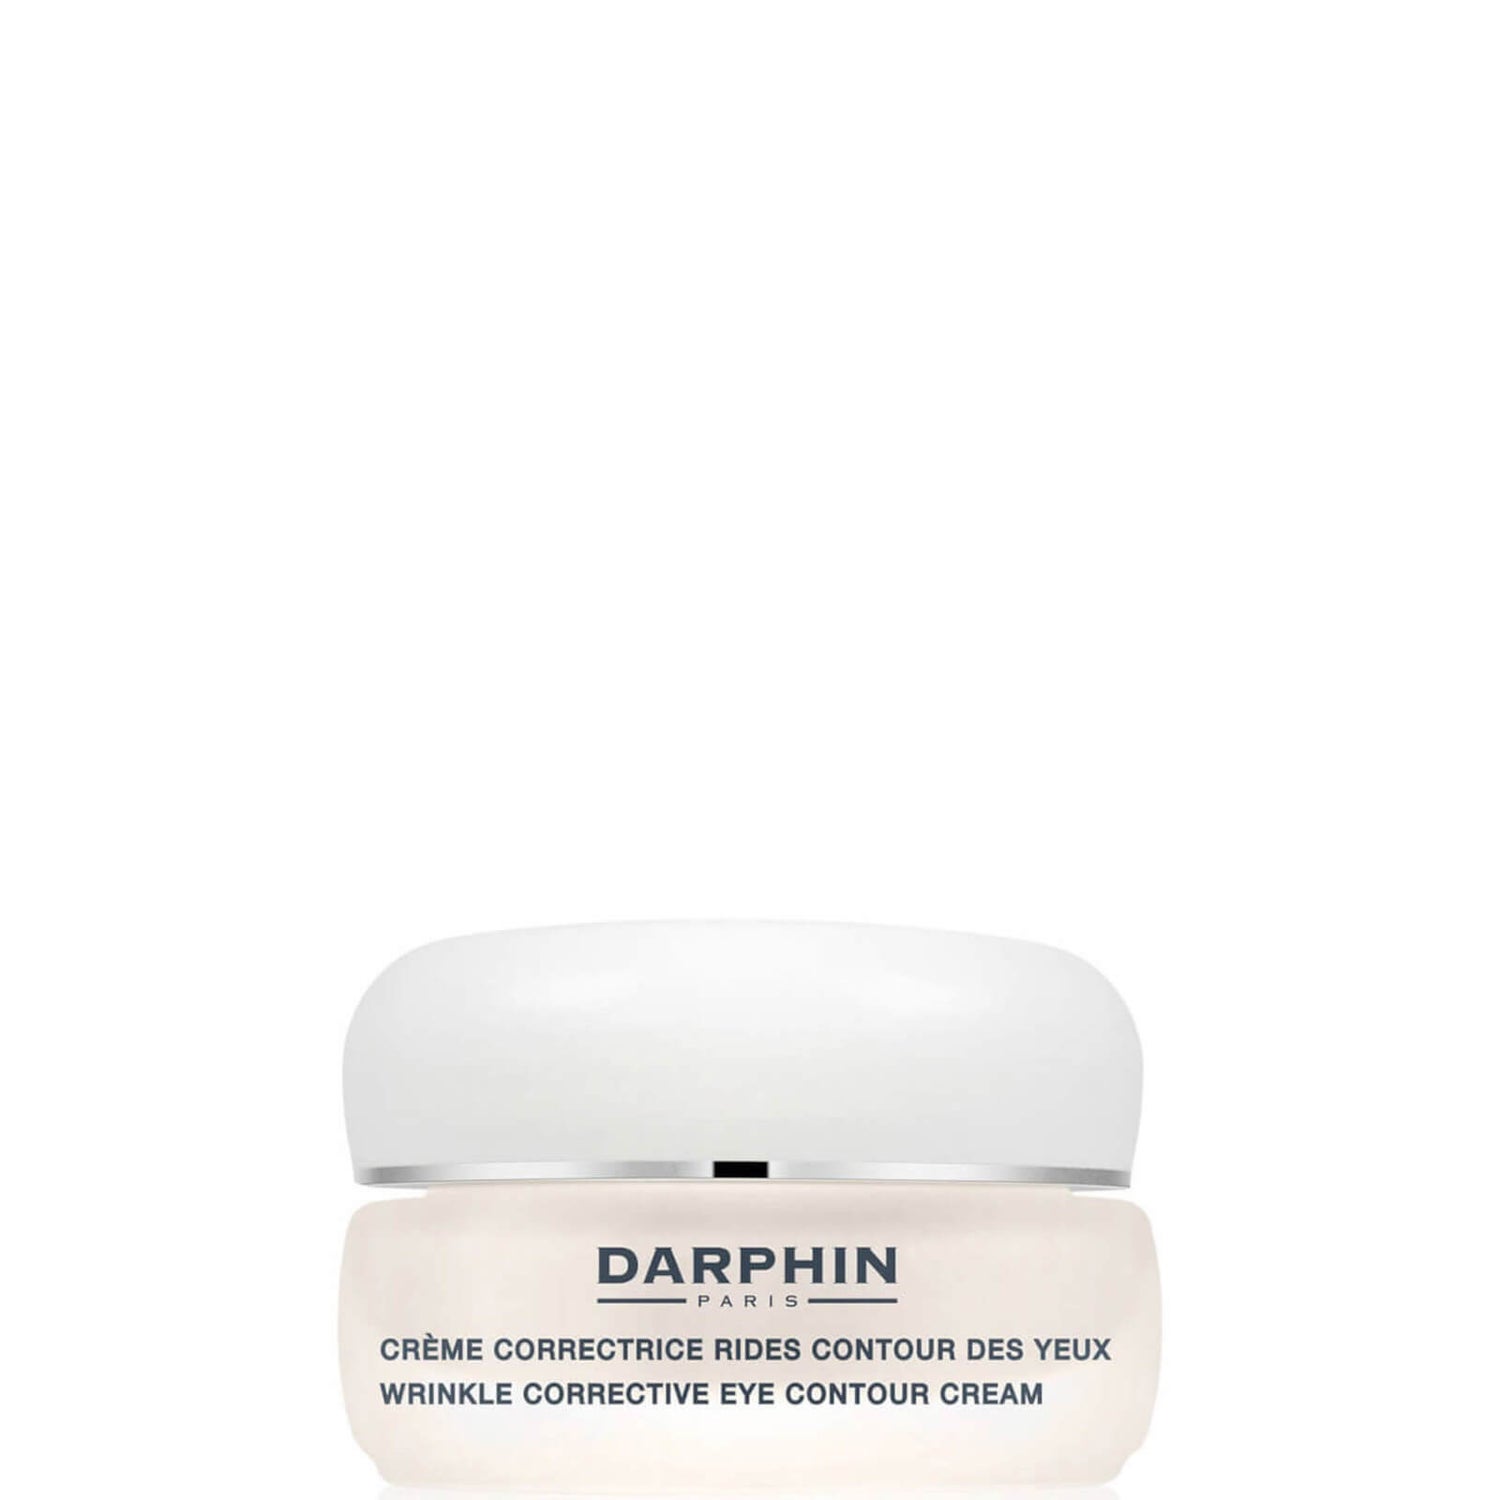 Darphin Wrinkle Corrective Eye Contour Cream (0.5 oz.)